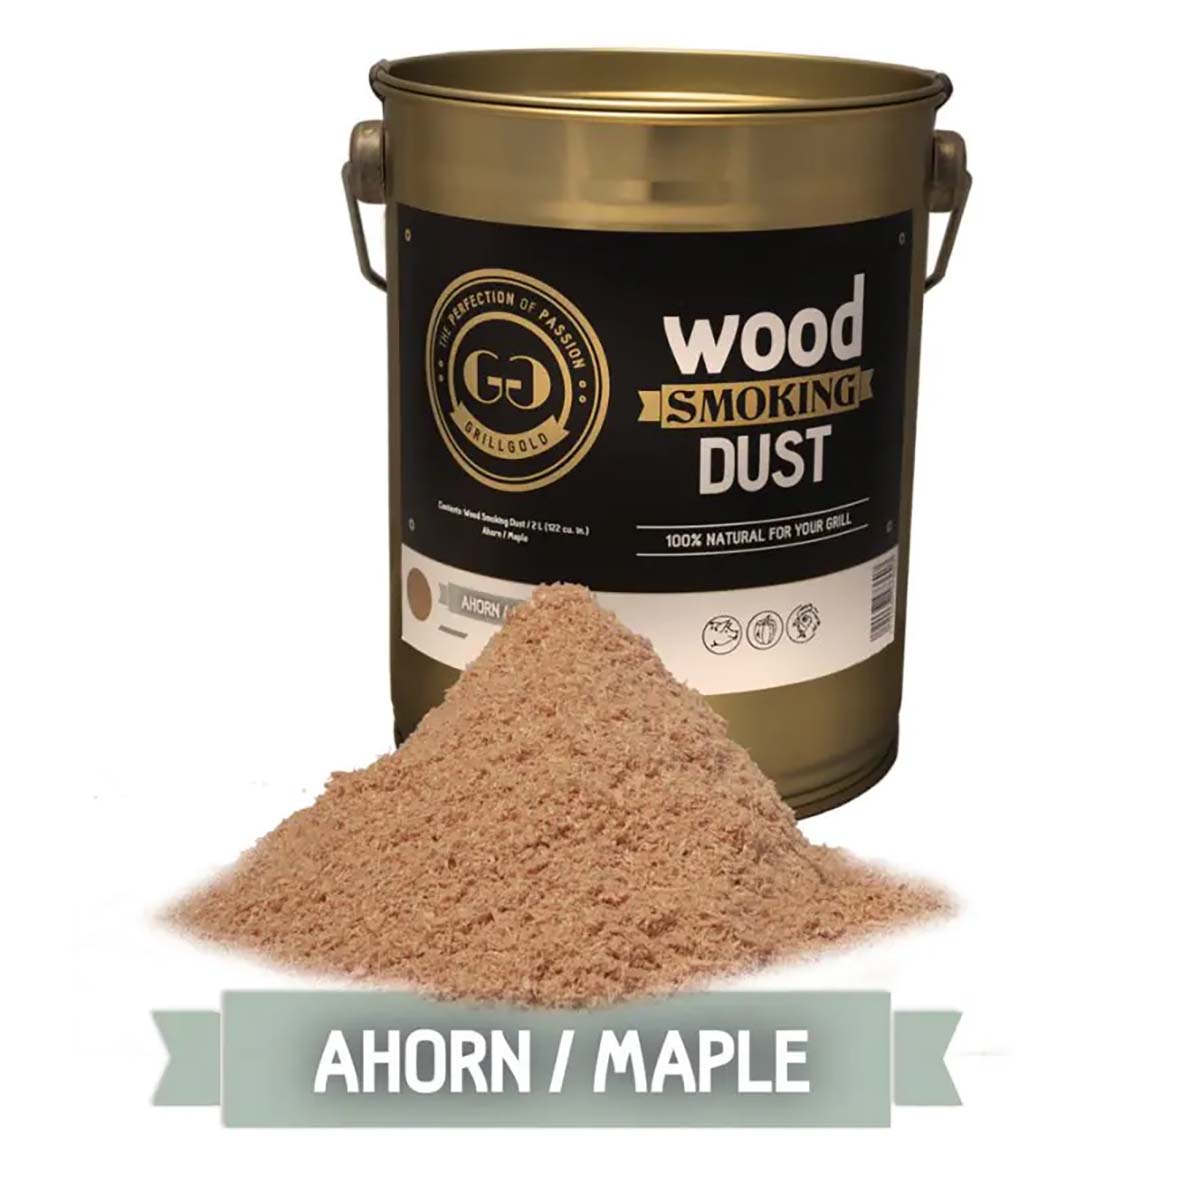 Grillgold Wood Smoking Dust / Ahorn / 2 Liter  (122 cu. in.)